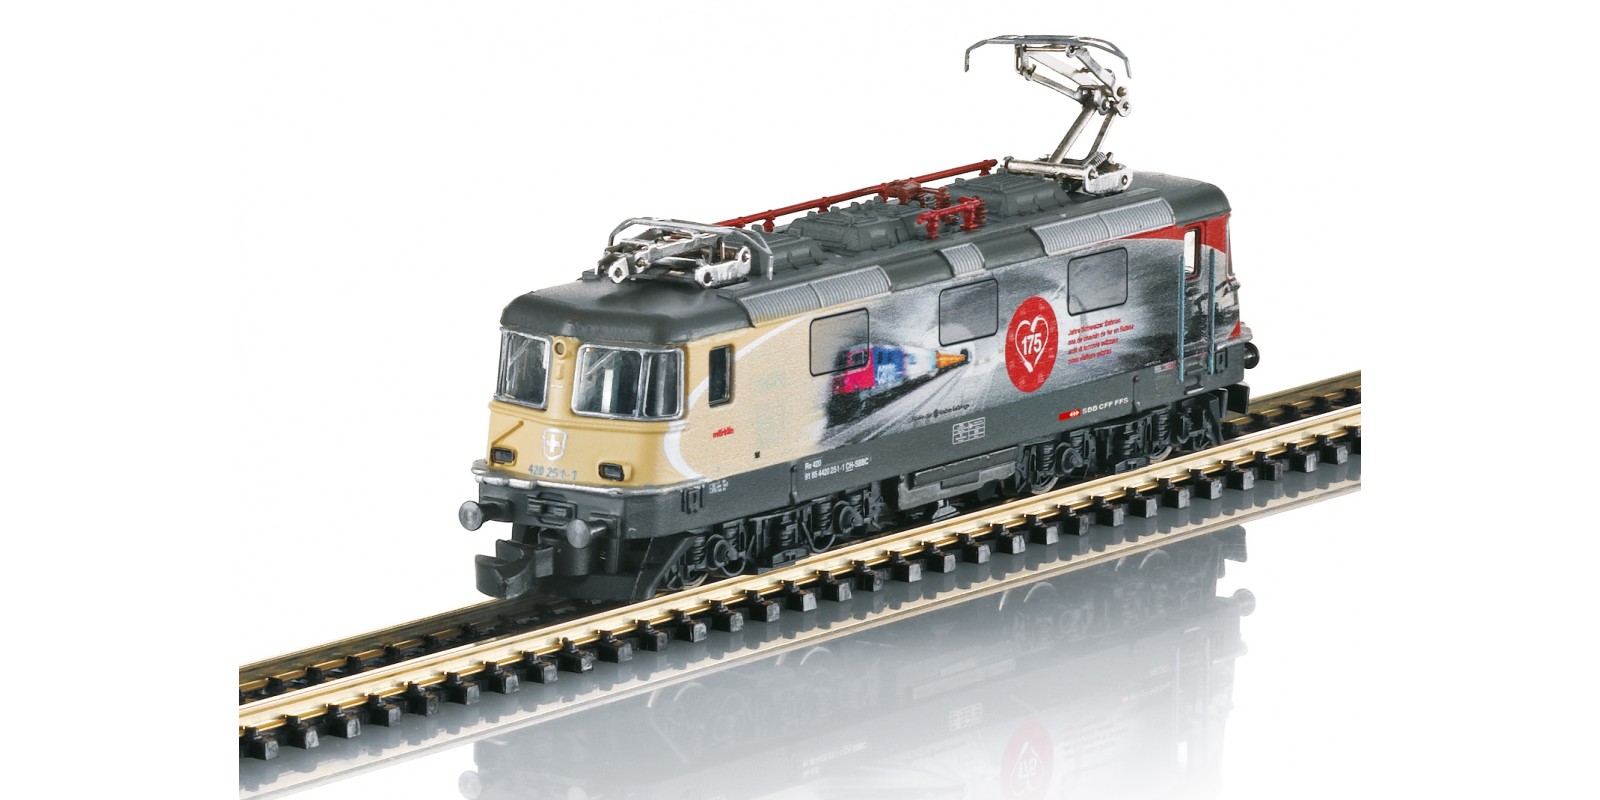 88596 Class Re 420 Electric Locomotive